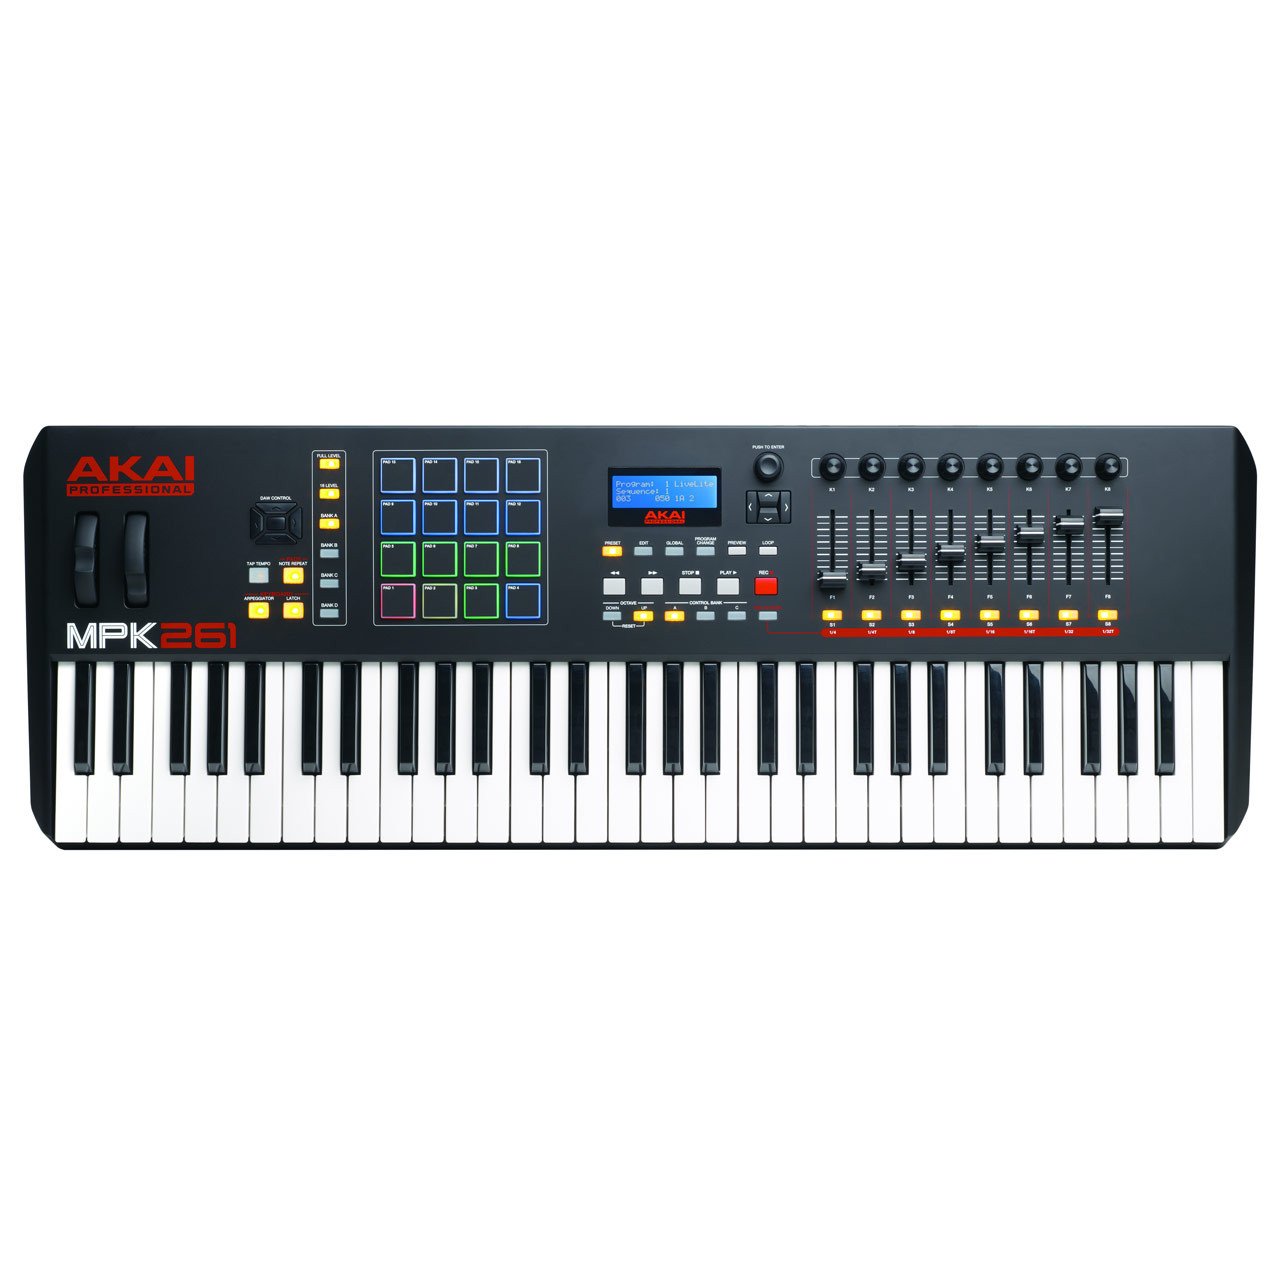 Controller Keyboards - Akai MPK 261 - 61 Note Controller Keyboard